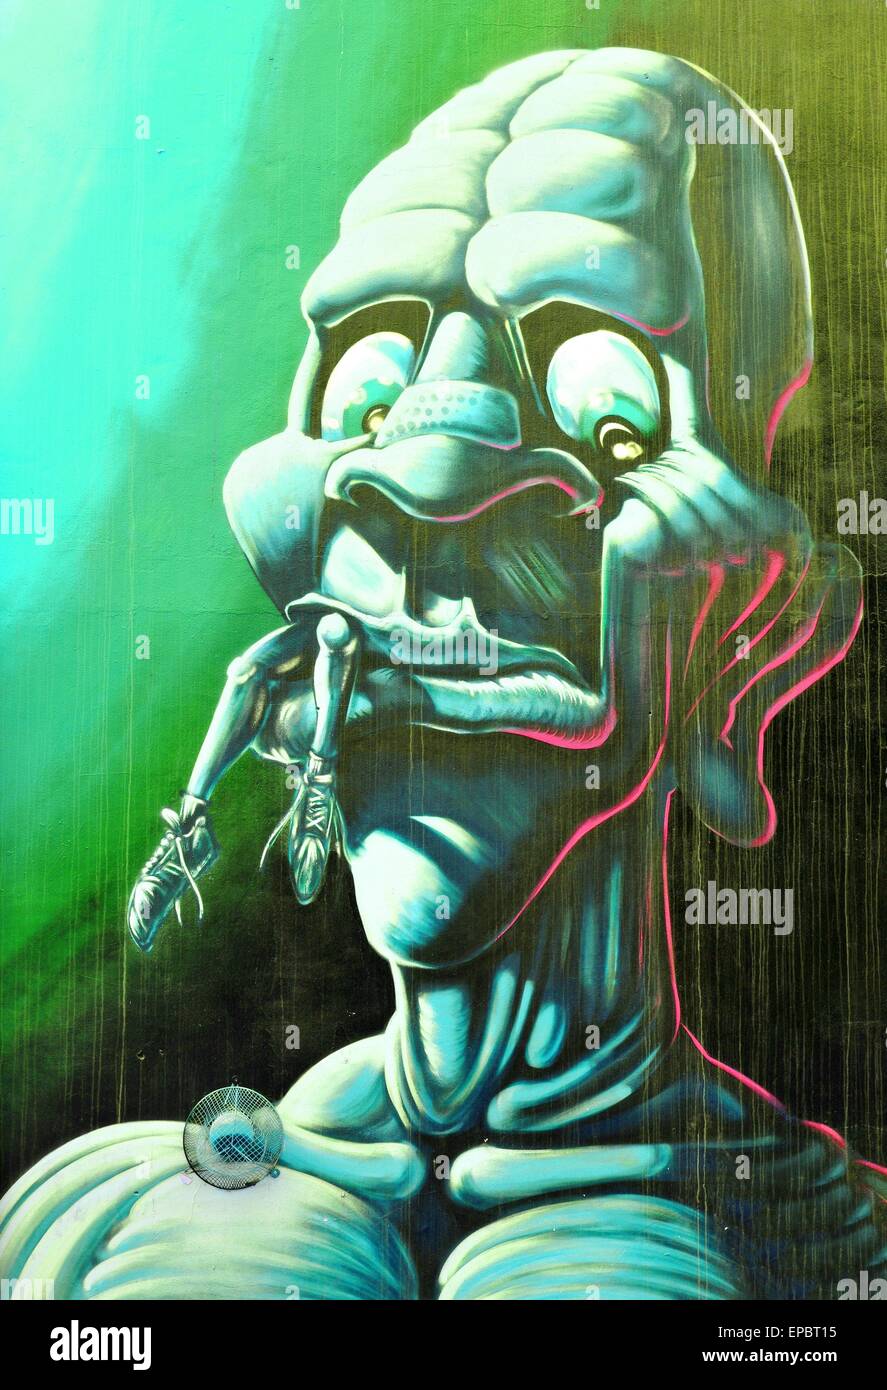 NOTTINGHAM, UK - APRIL 1, 2015: Detail of street art abstract graffiti depicting a monster in Nottingham, East Midlands, England Stock Photo